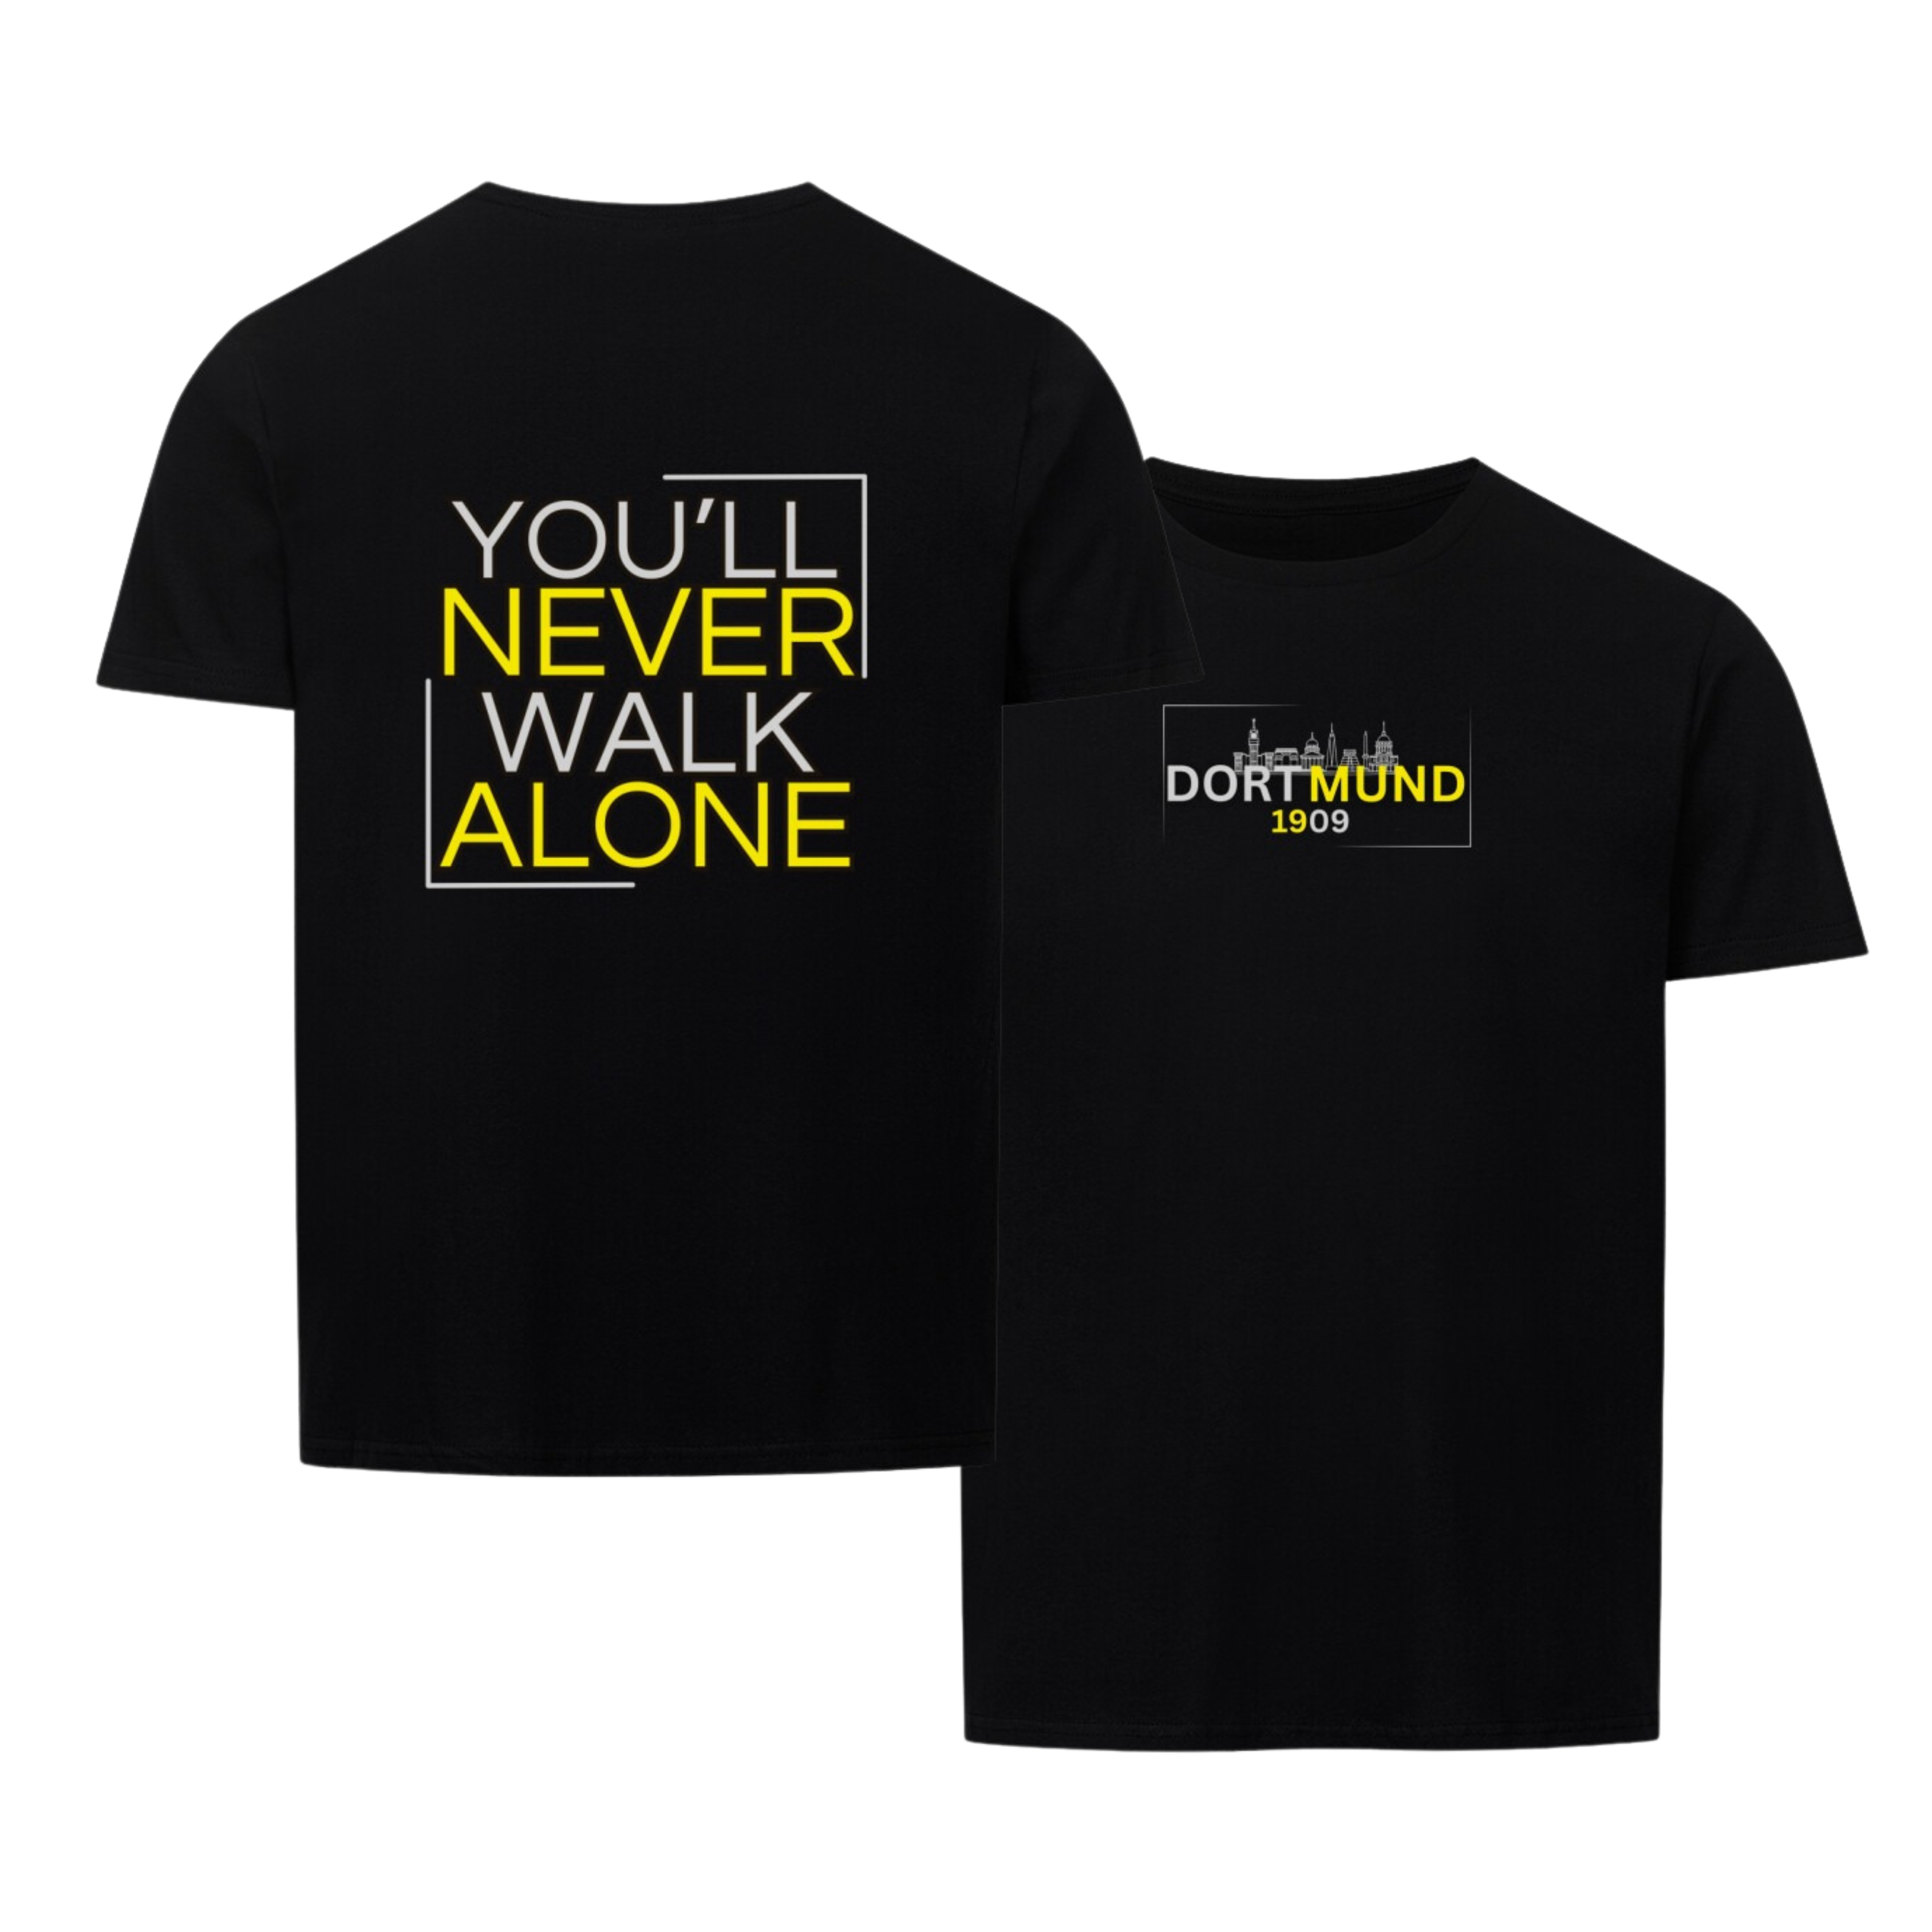 You'll never walk alone - T-Shirt